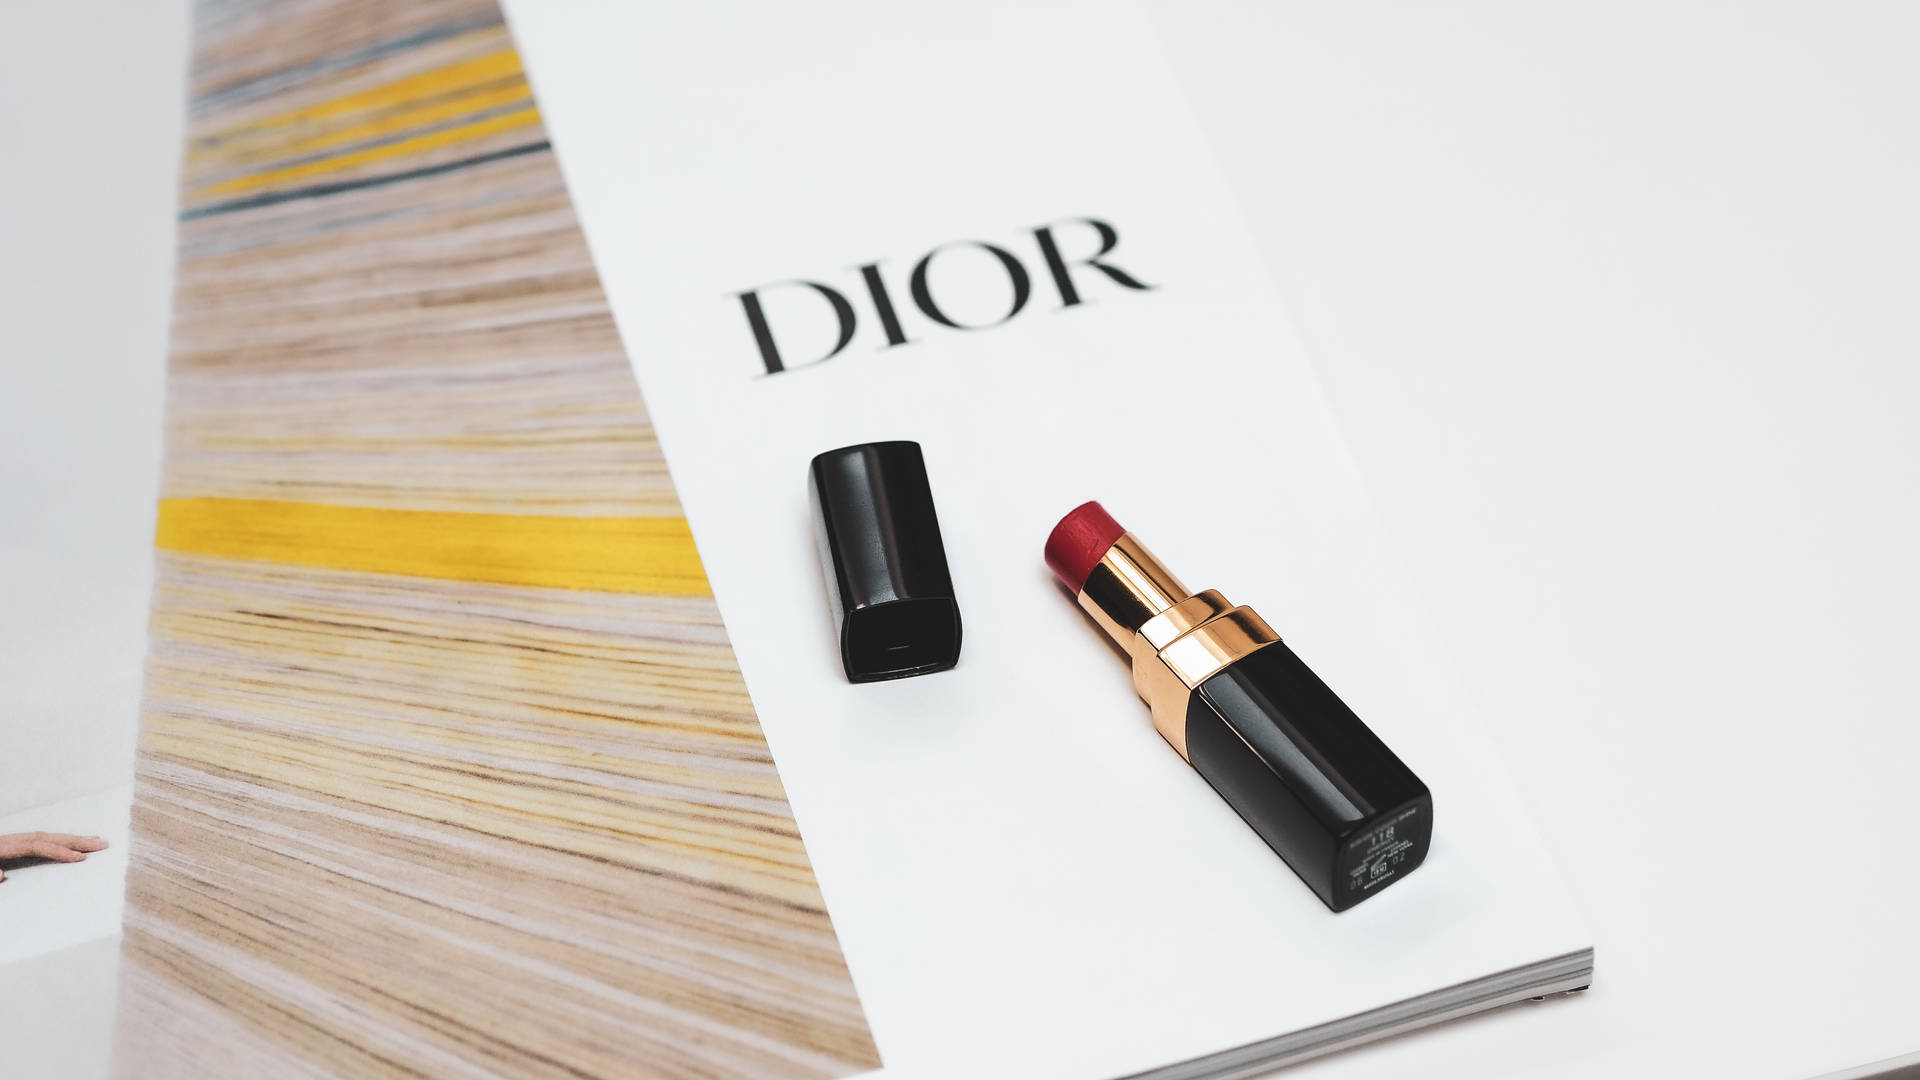 Dior Magazine And Lipstick